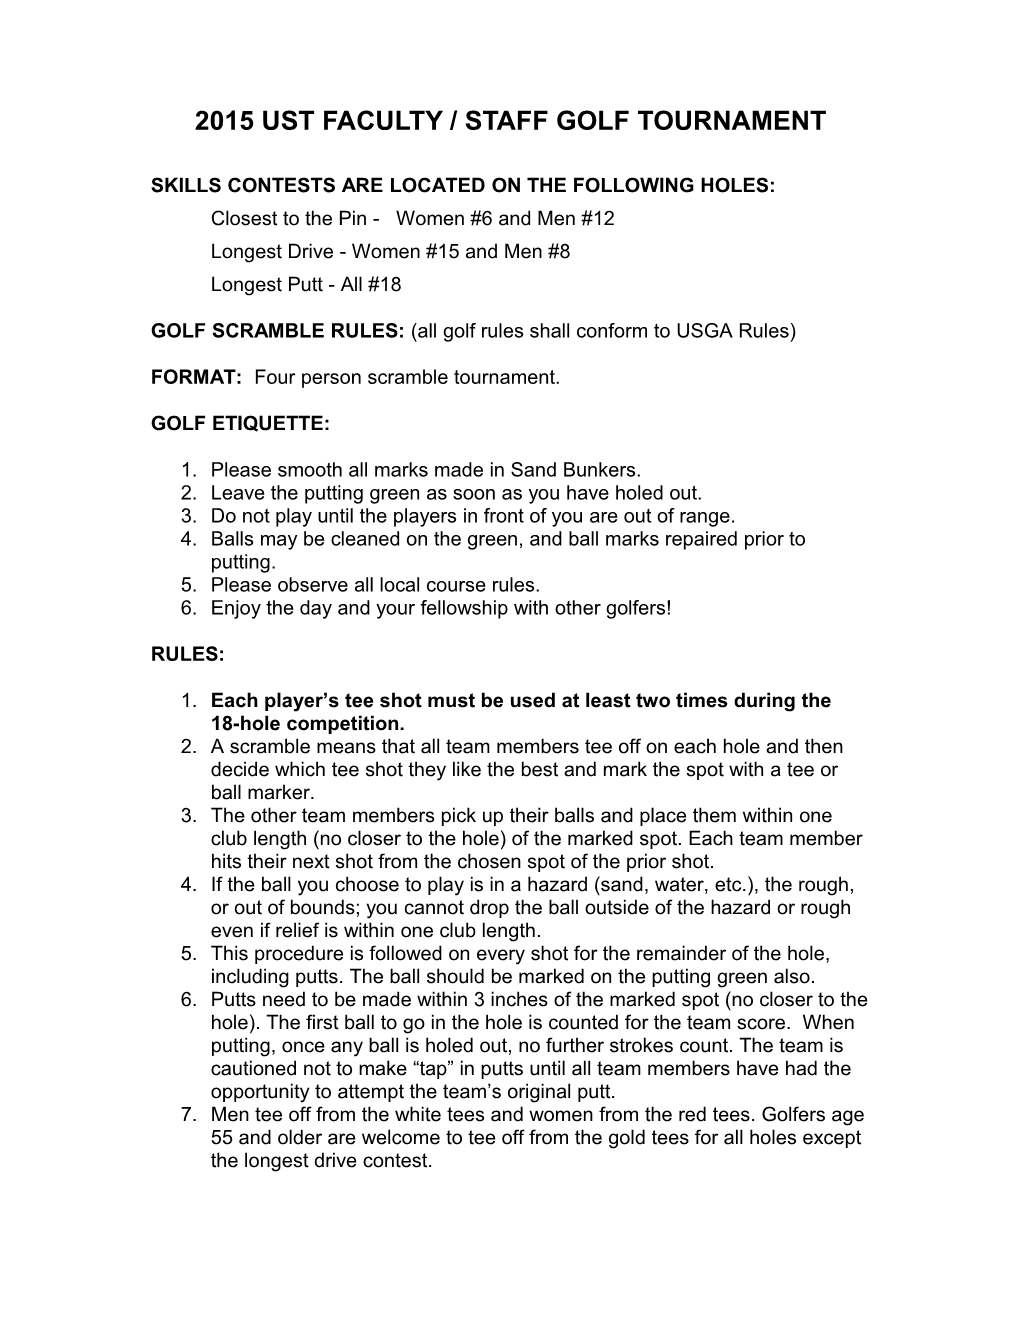 GOLF SCRAMBLE RULES: (All Golf Rules Shall Conform to USGA Rules)